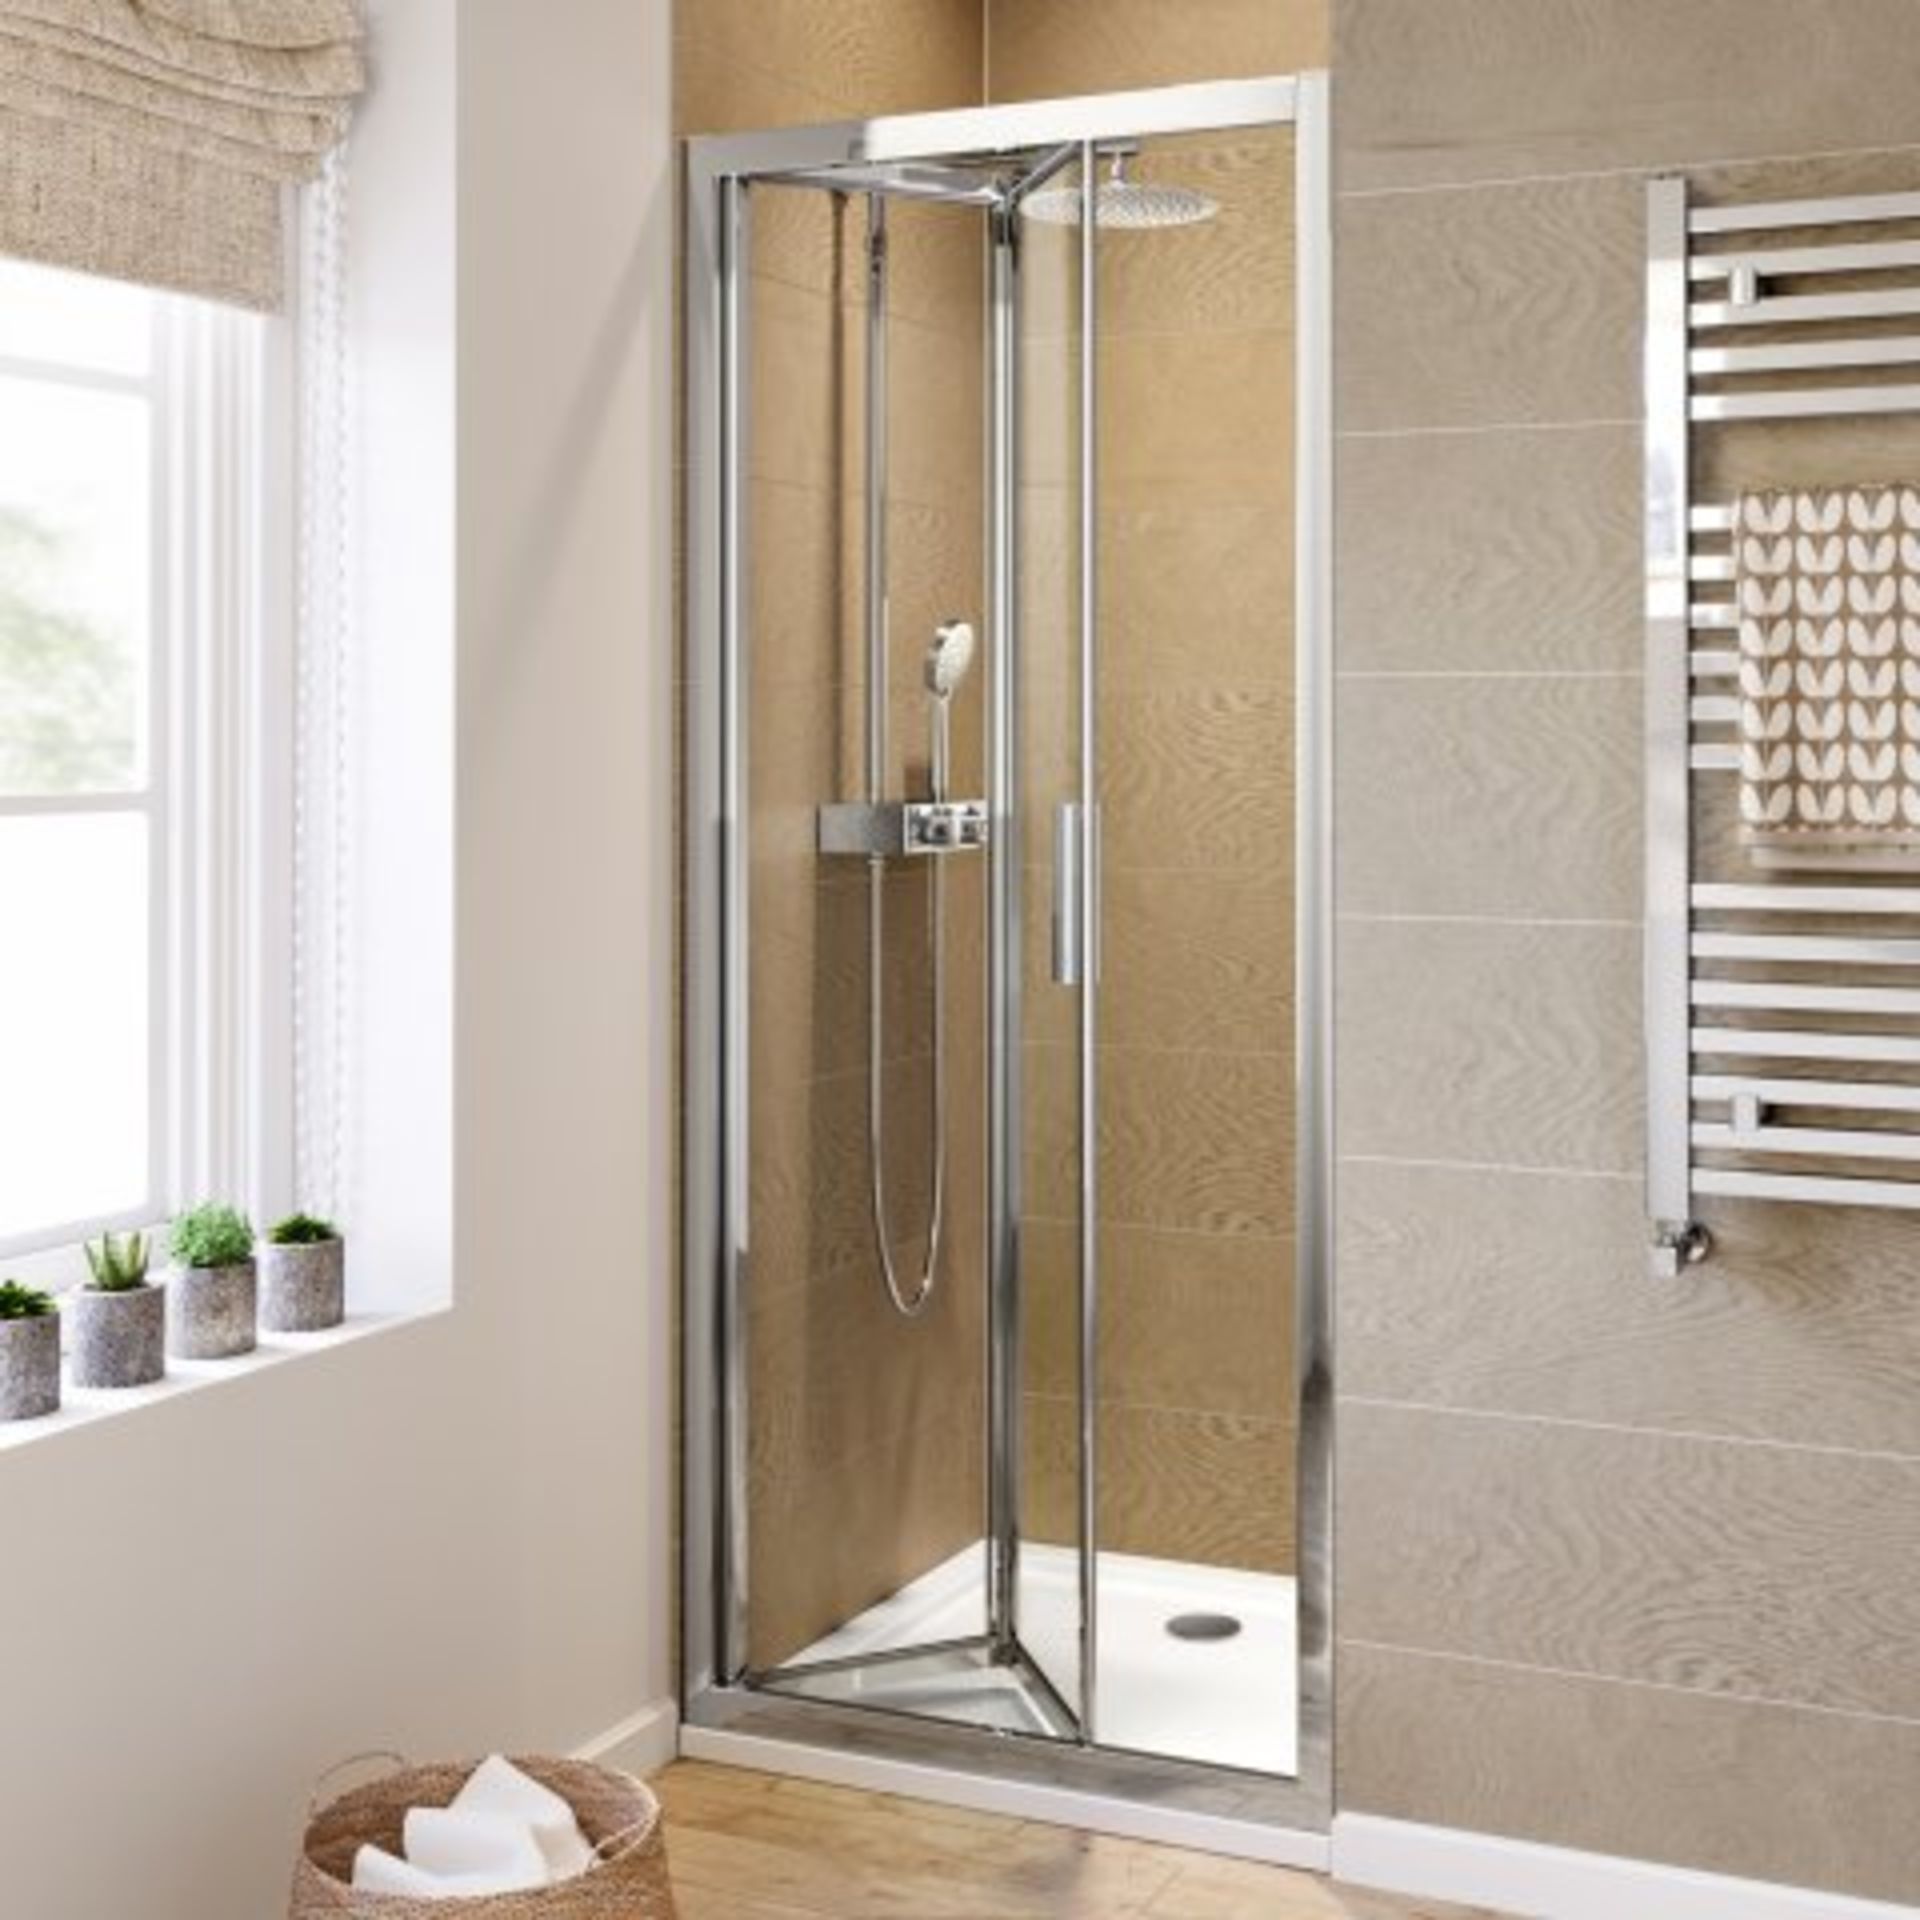 (N72) 900mm - 6mm - Elements EasyClean Bifold Shower Door. RRP £299.99. Essential Design Our - Image 2 of 3